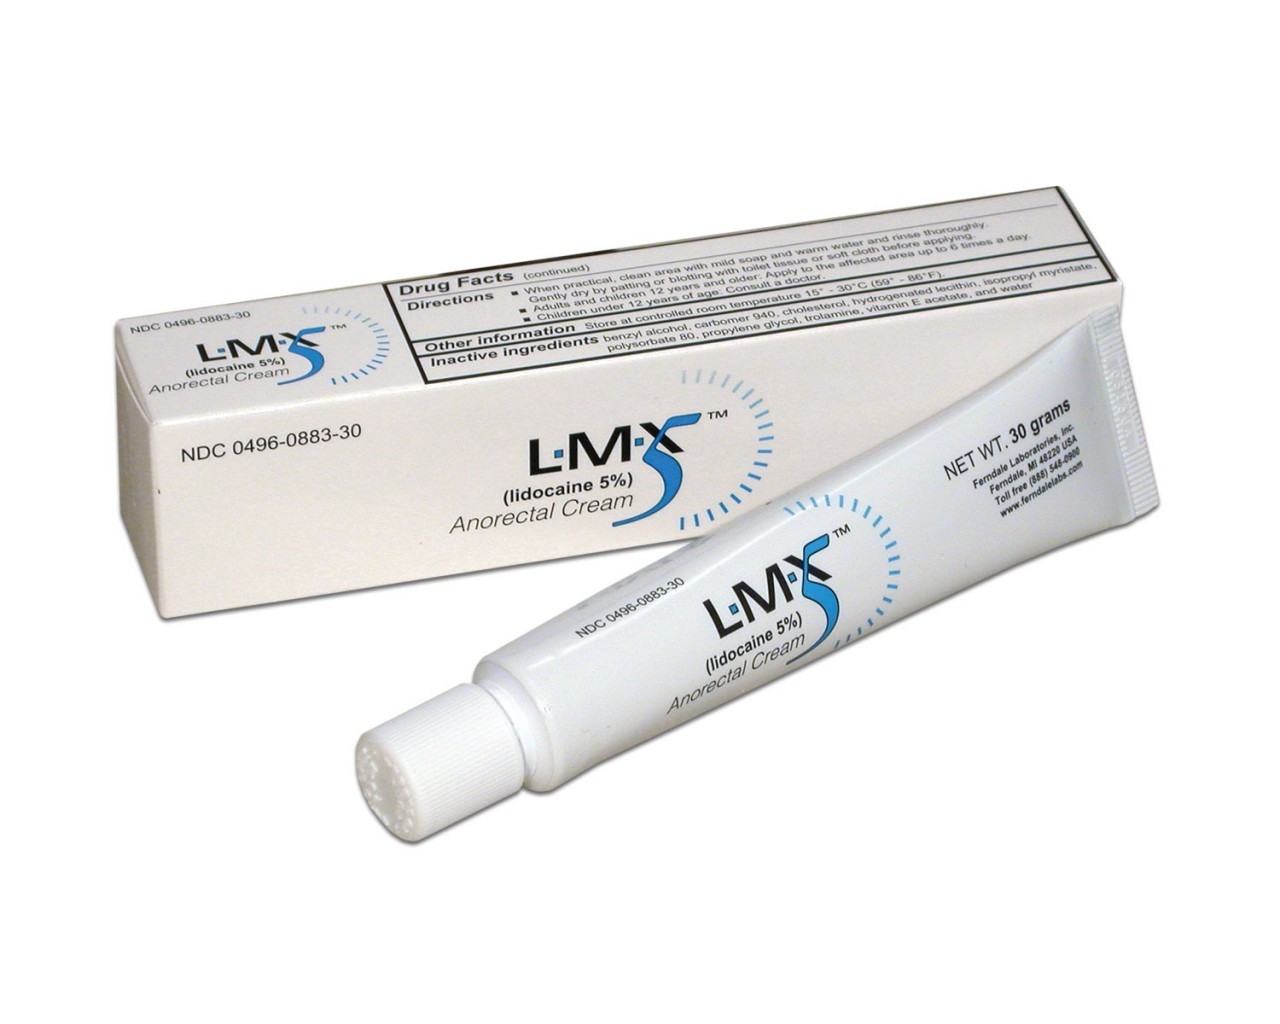 参比制剂,进口原料药,医药原料药 Ferndale Lmx5 Anorectal Cream # 0883-30 - Anorectal Cream, LMX5 30gm, Each